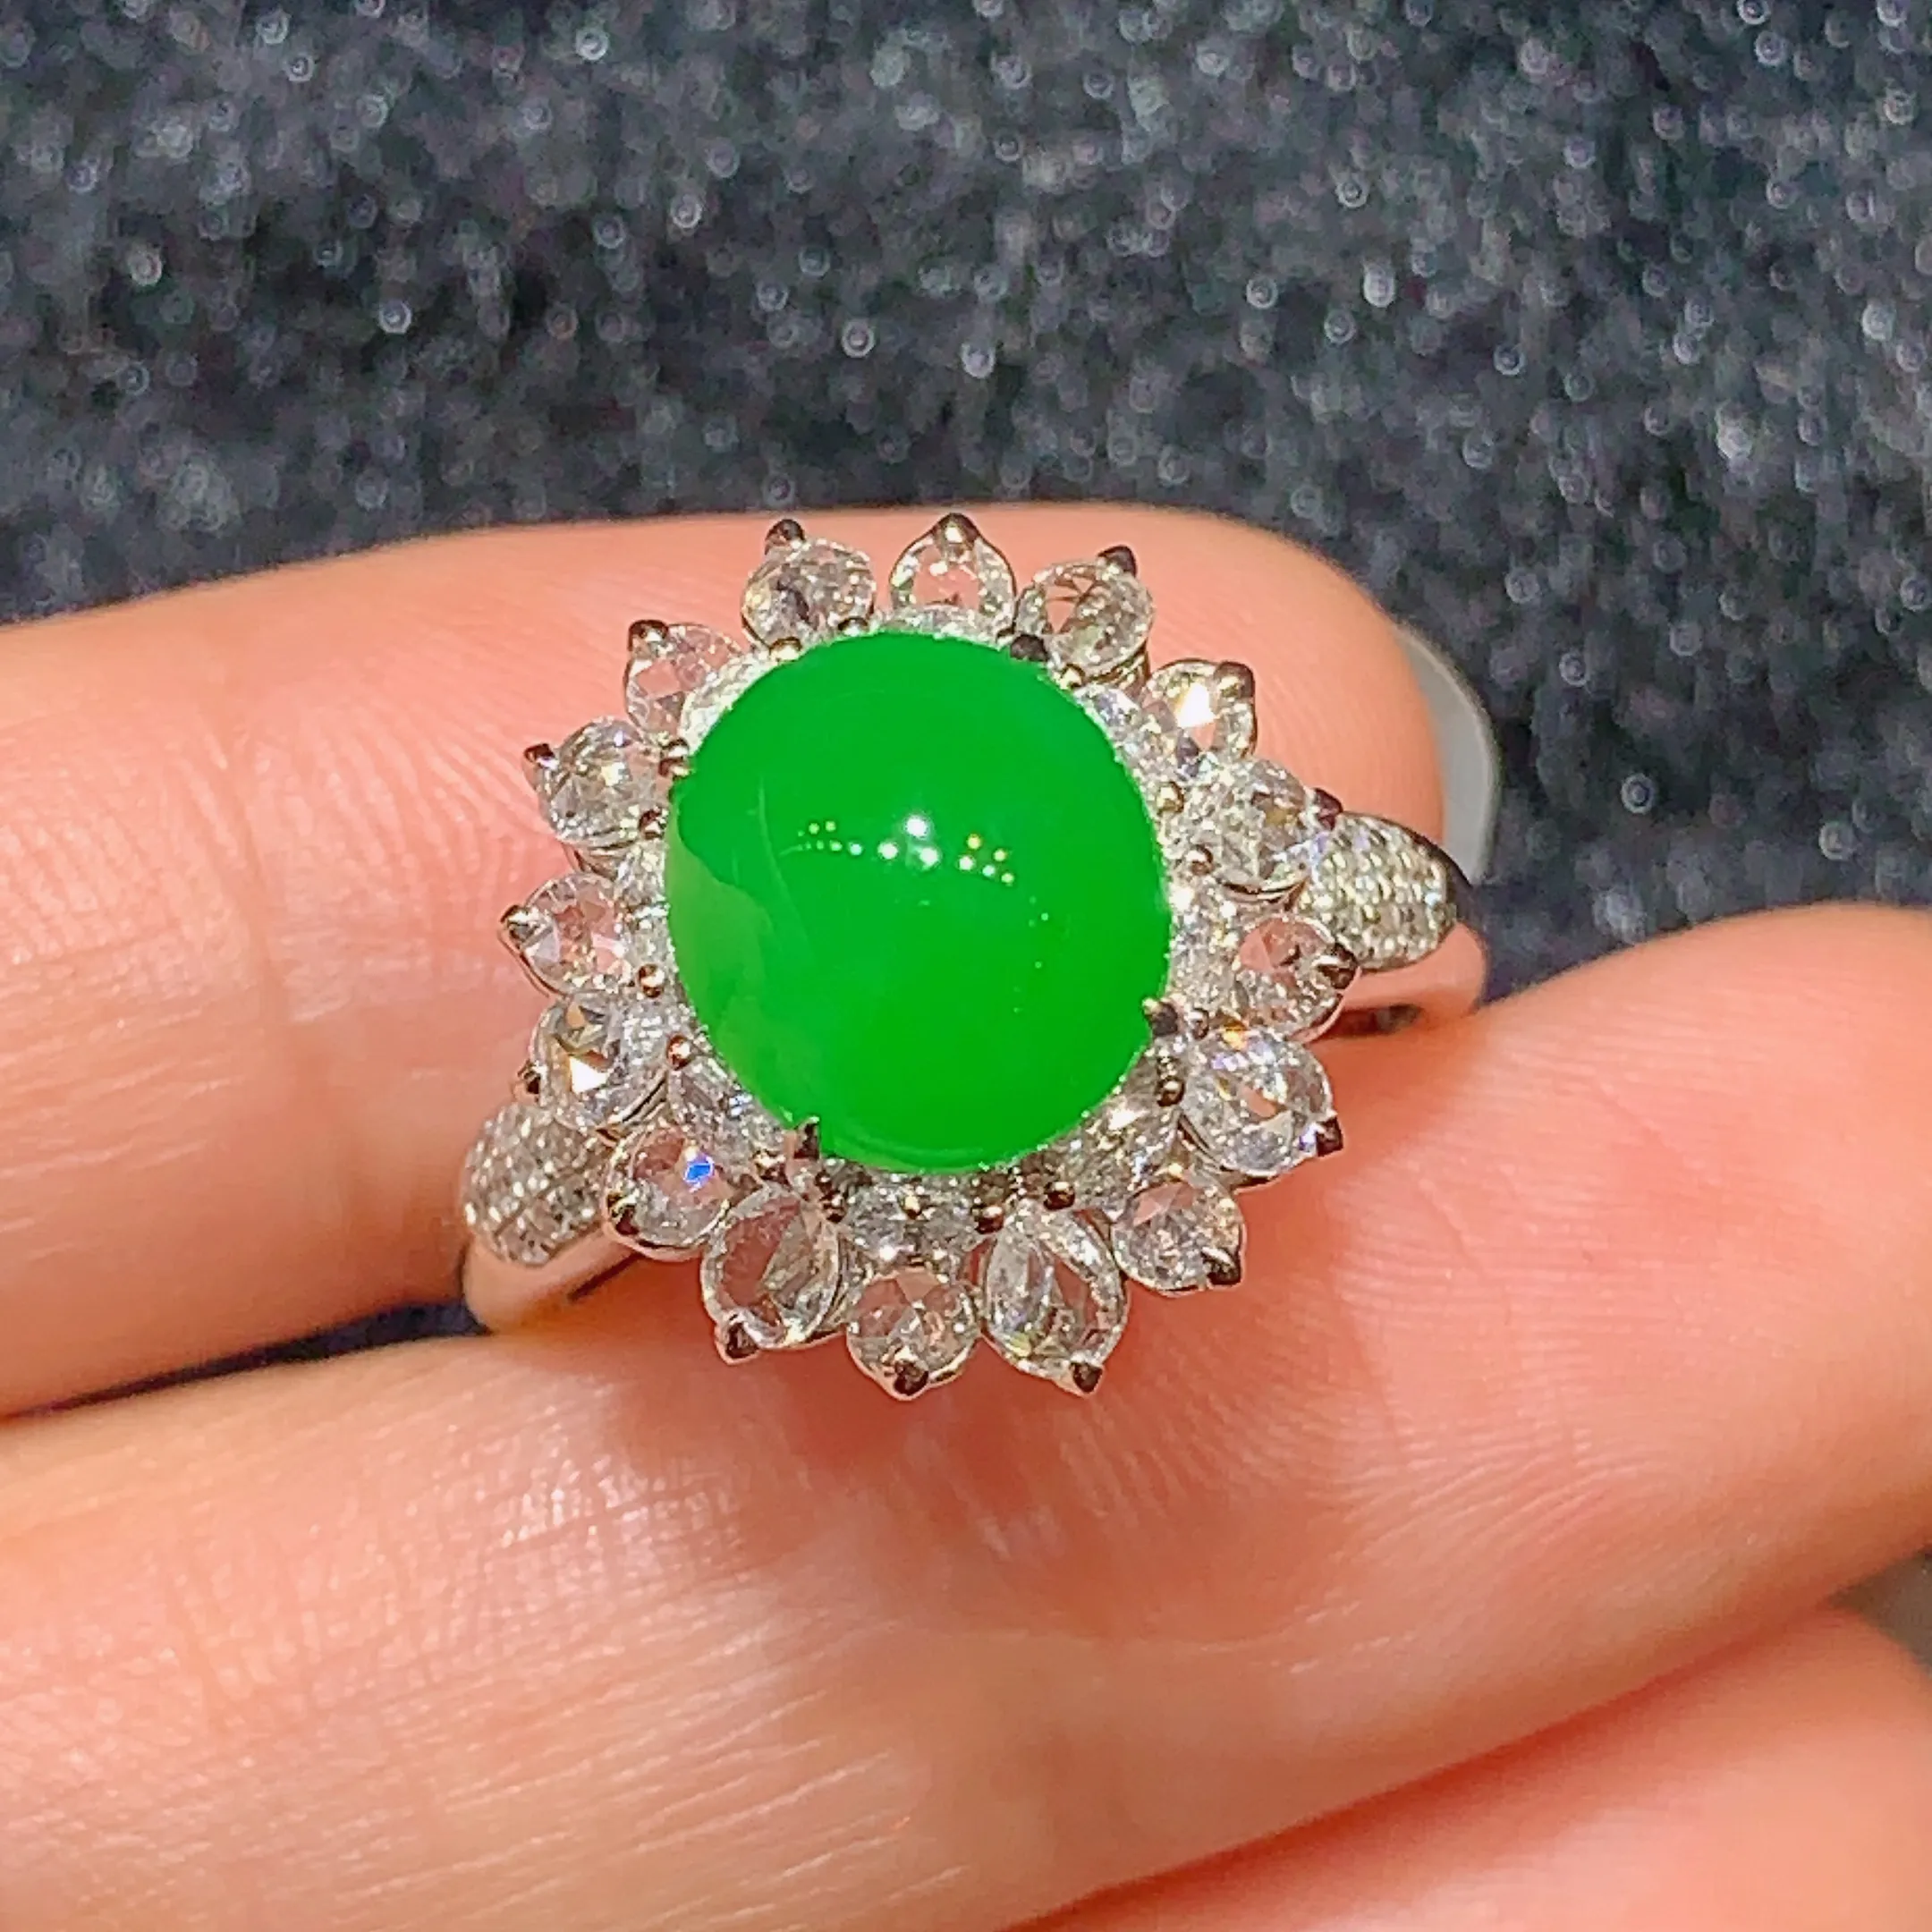 18k金钻镶嵌满绿蛋面戒指 玉质细腻 色泽艳丽 款式新颖时尚唯美 圈口14 整体尺寸16.1*14.